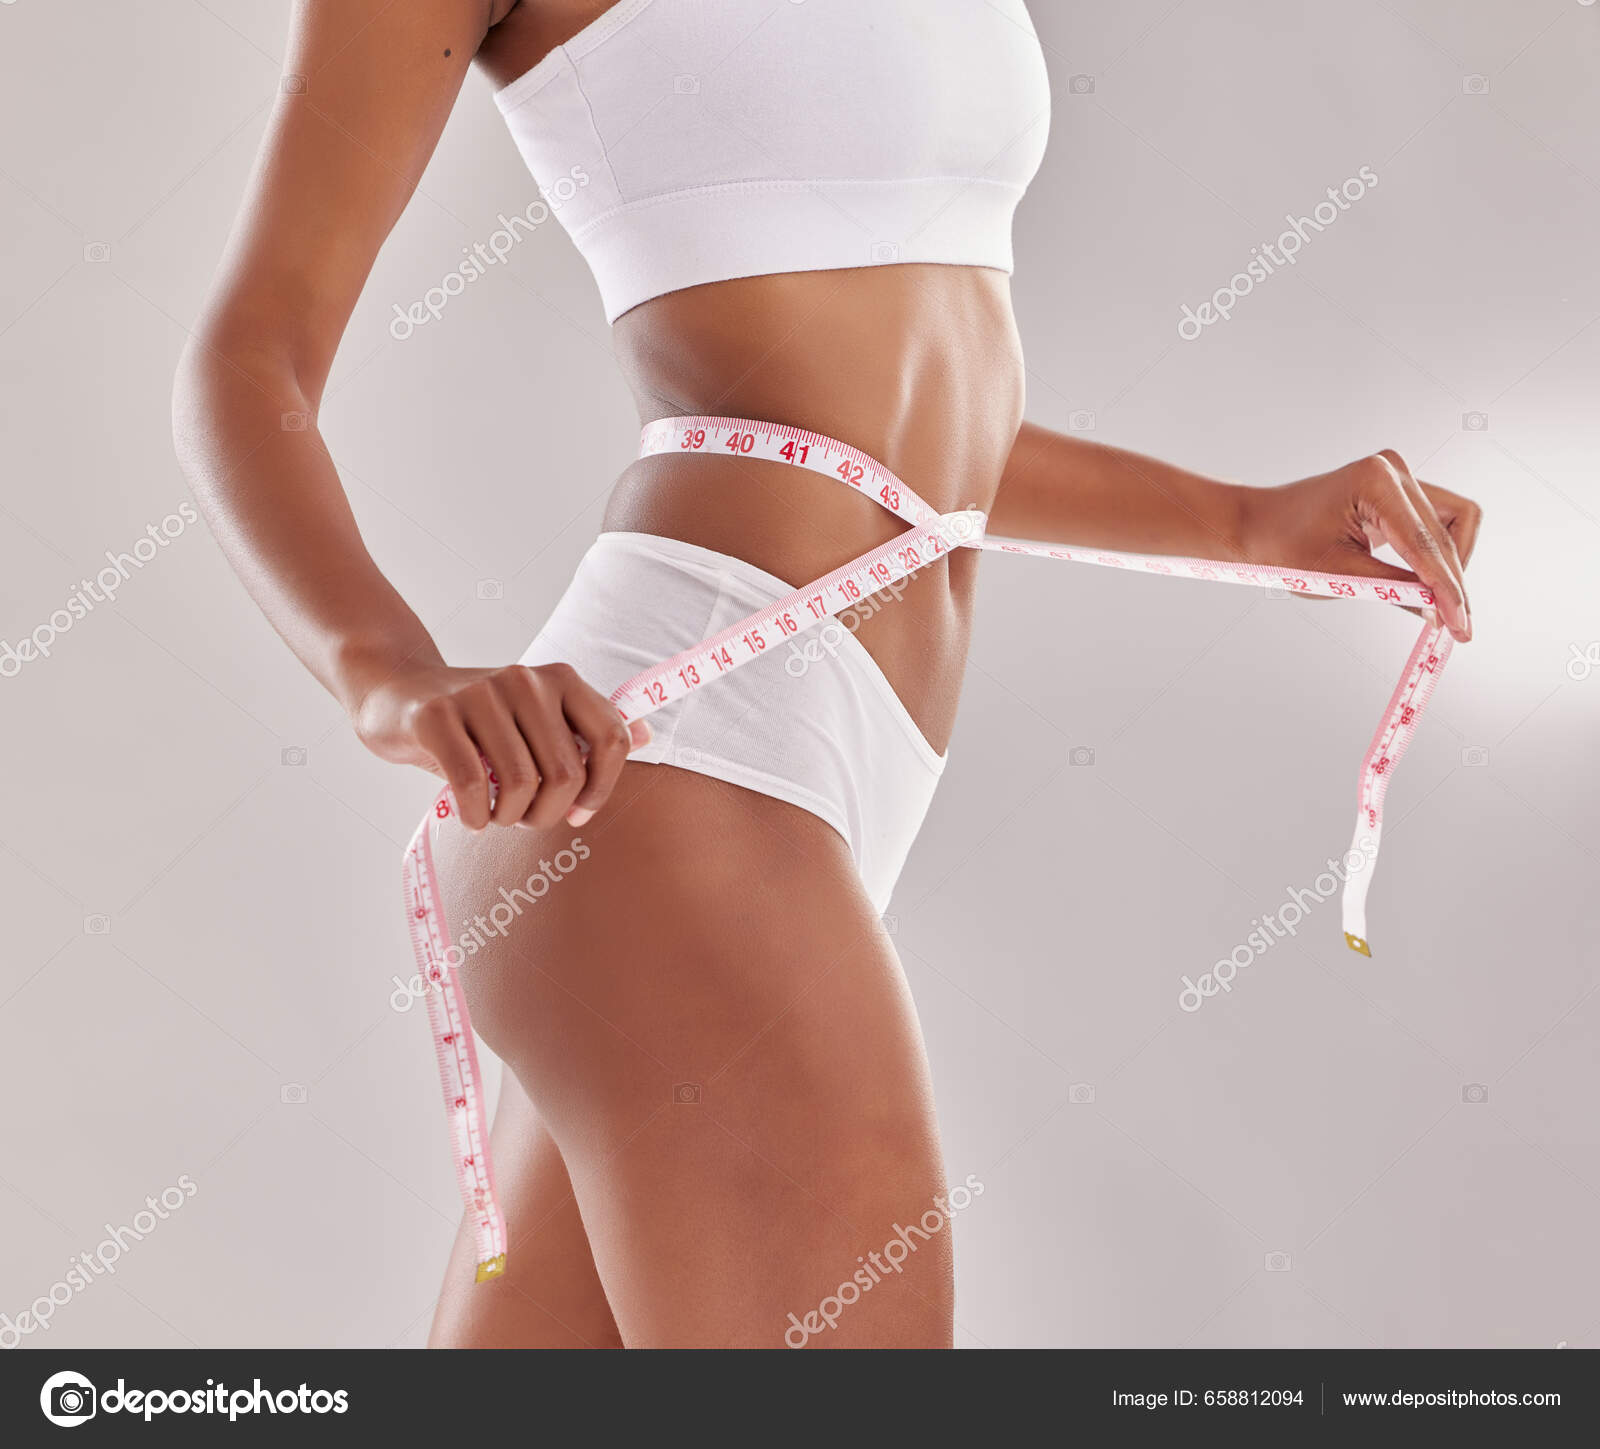 https://st5.depositphotos.com/62628780/65881/i/1600/depositphotos_658812094-stock-photo-woman-underwear-body-measuring-tape.jpg